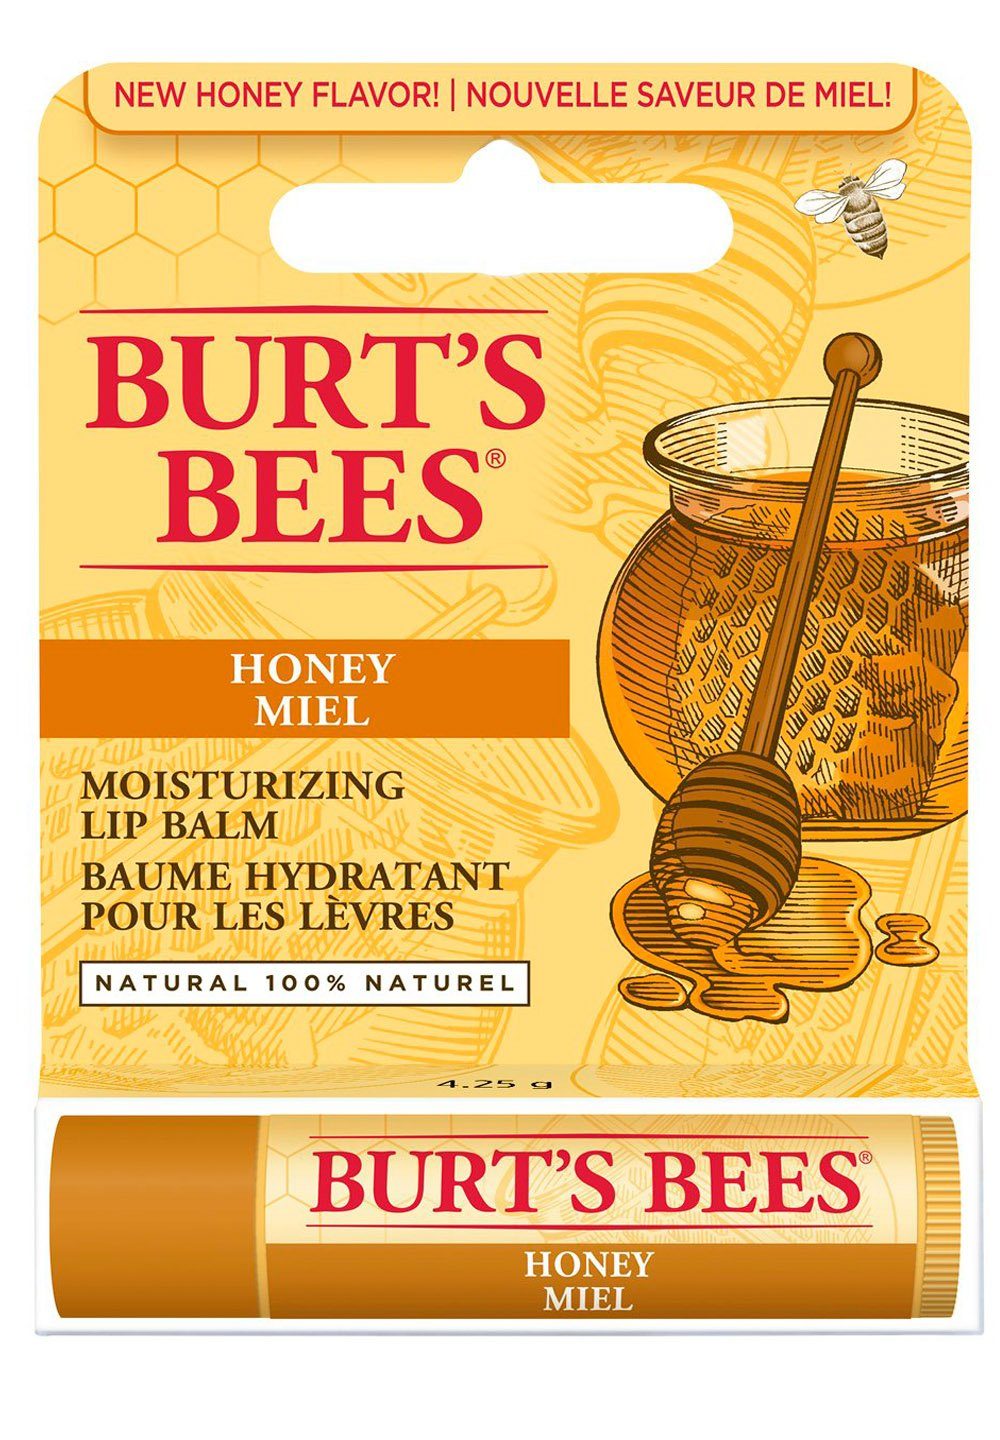 BURT'S BEES Lippenbalsam Honig, Lip g Blister 4,25 Balm